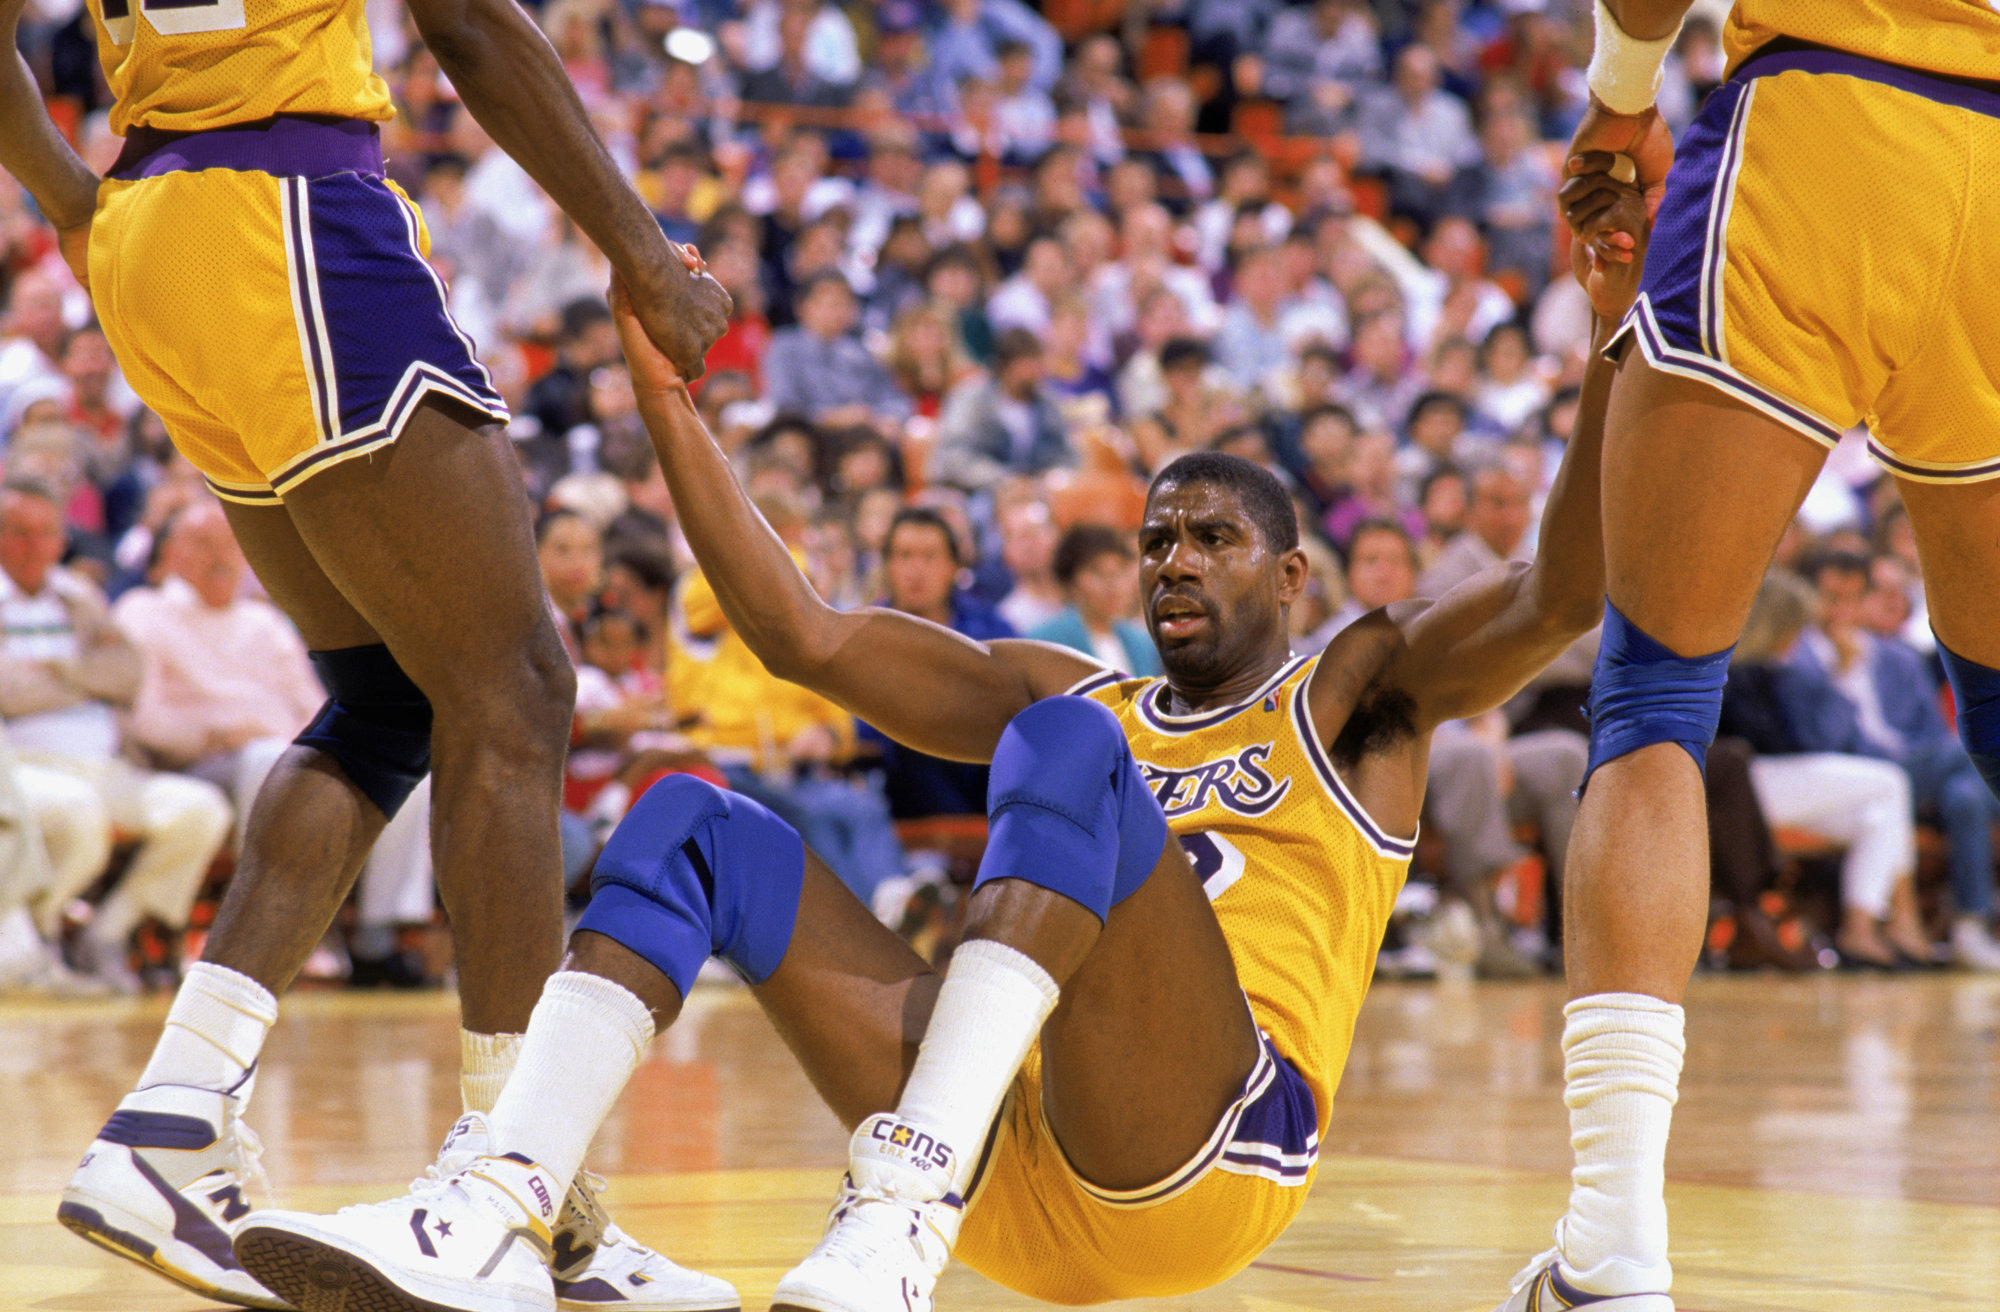 Magic Johnson #32 of the Los Angeles Lakers and Michael Jordan #23